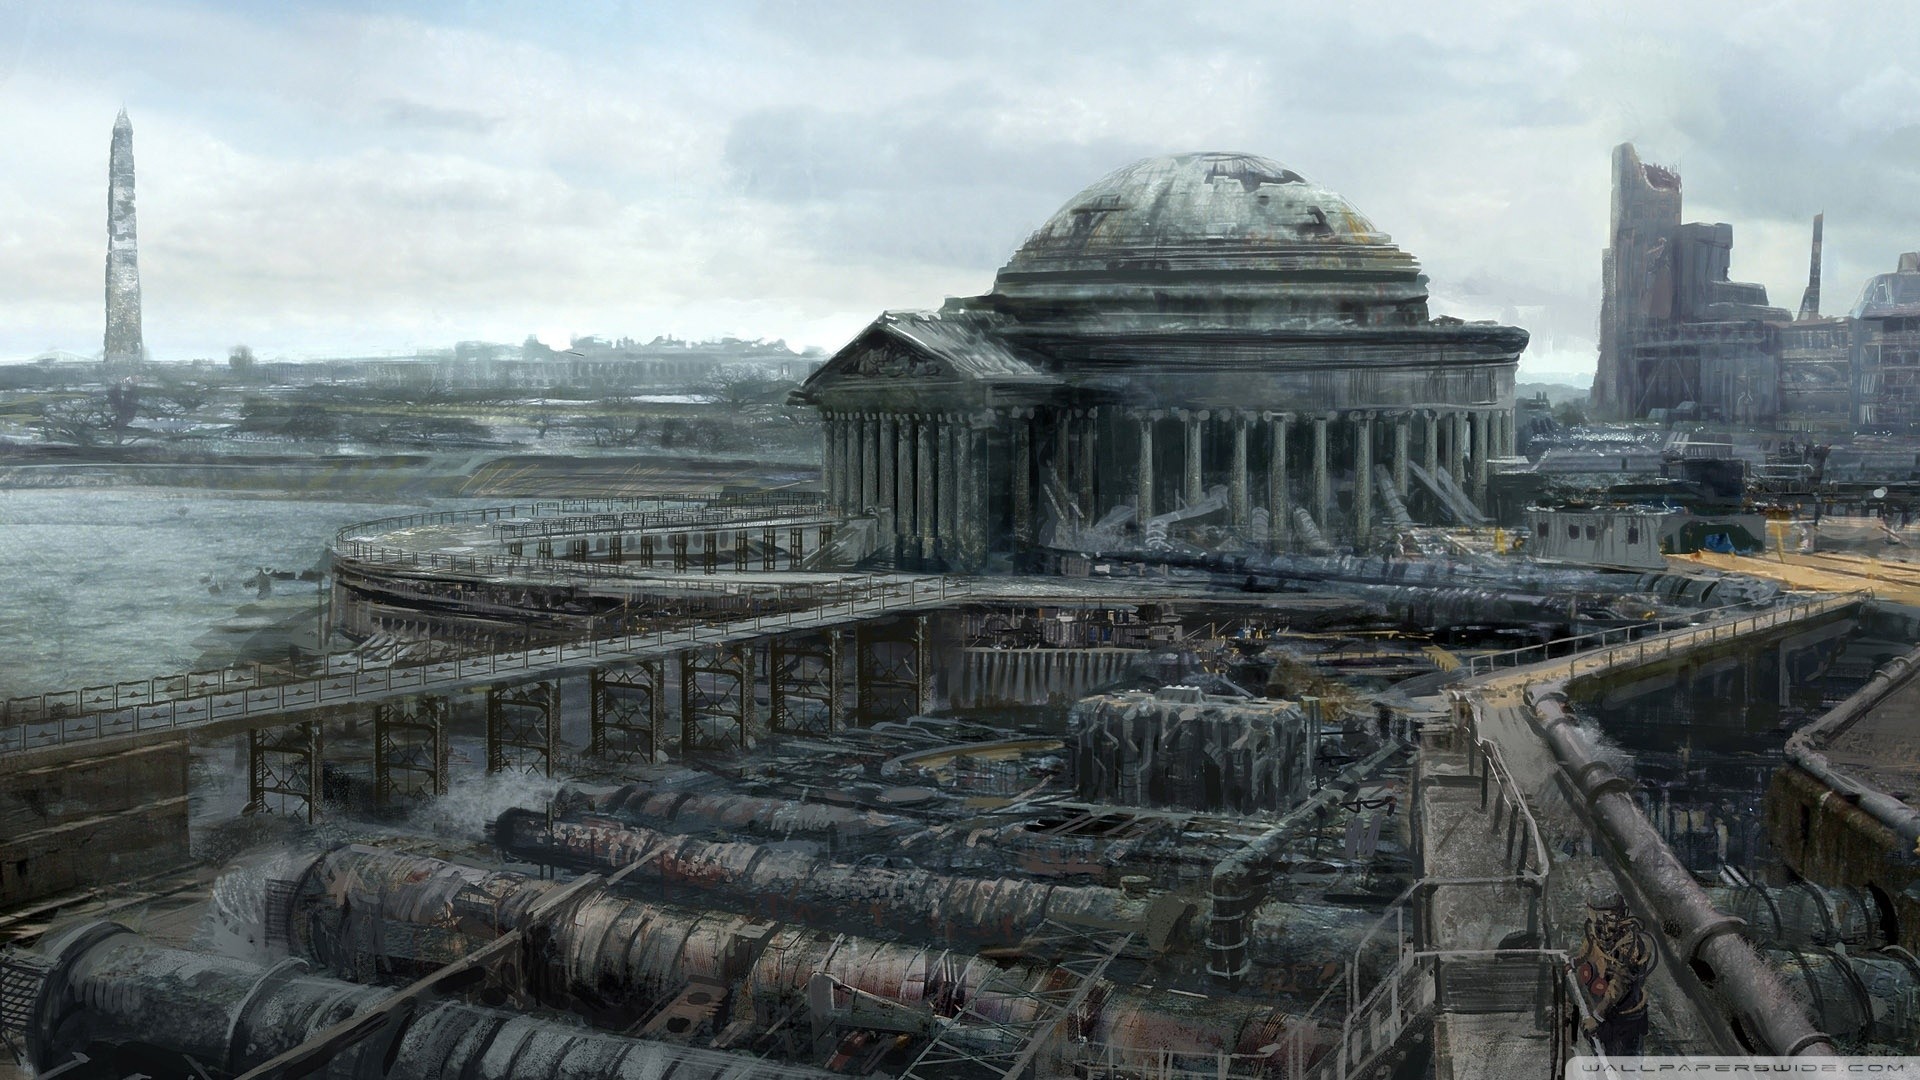 General 1920x1080 Fallout Fallout 3 video games concept art apocalyptic artwork Washington, D.C. video game art PC gaming futuristic ruins